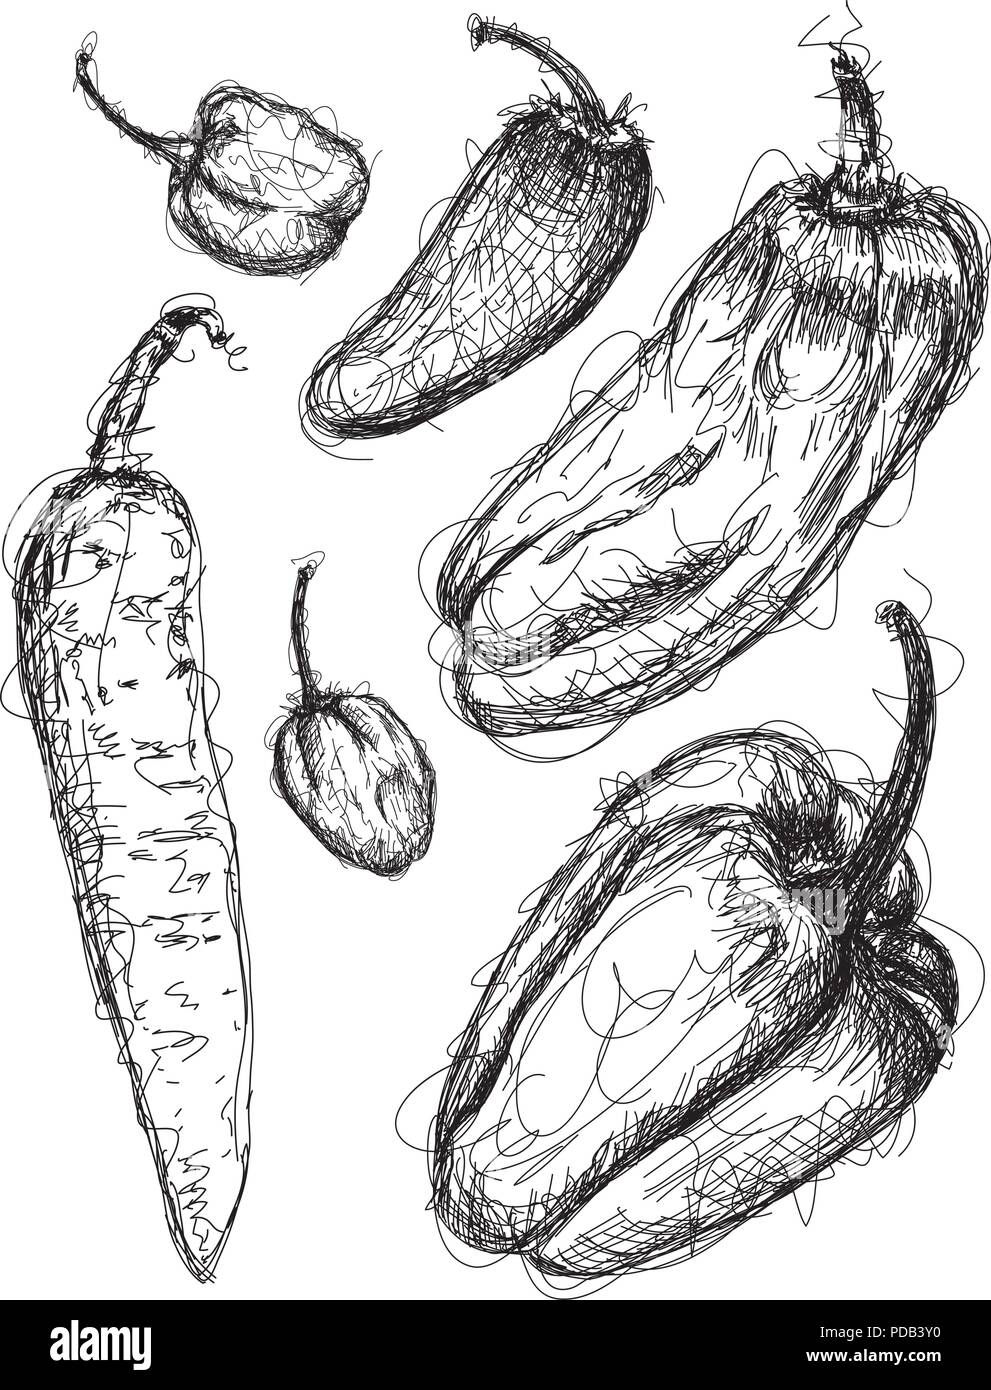 Chili pepper sketches Stock Vector